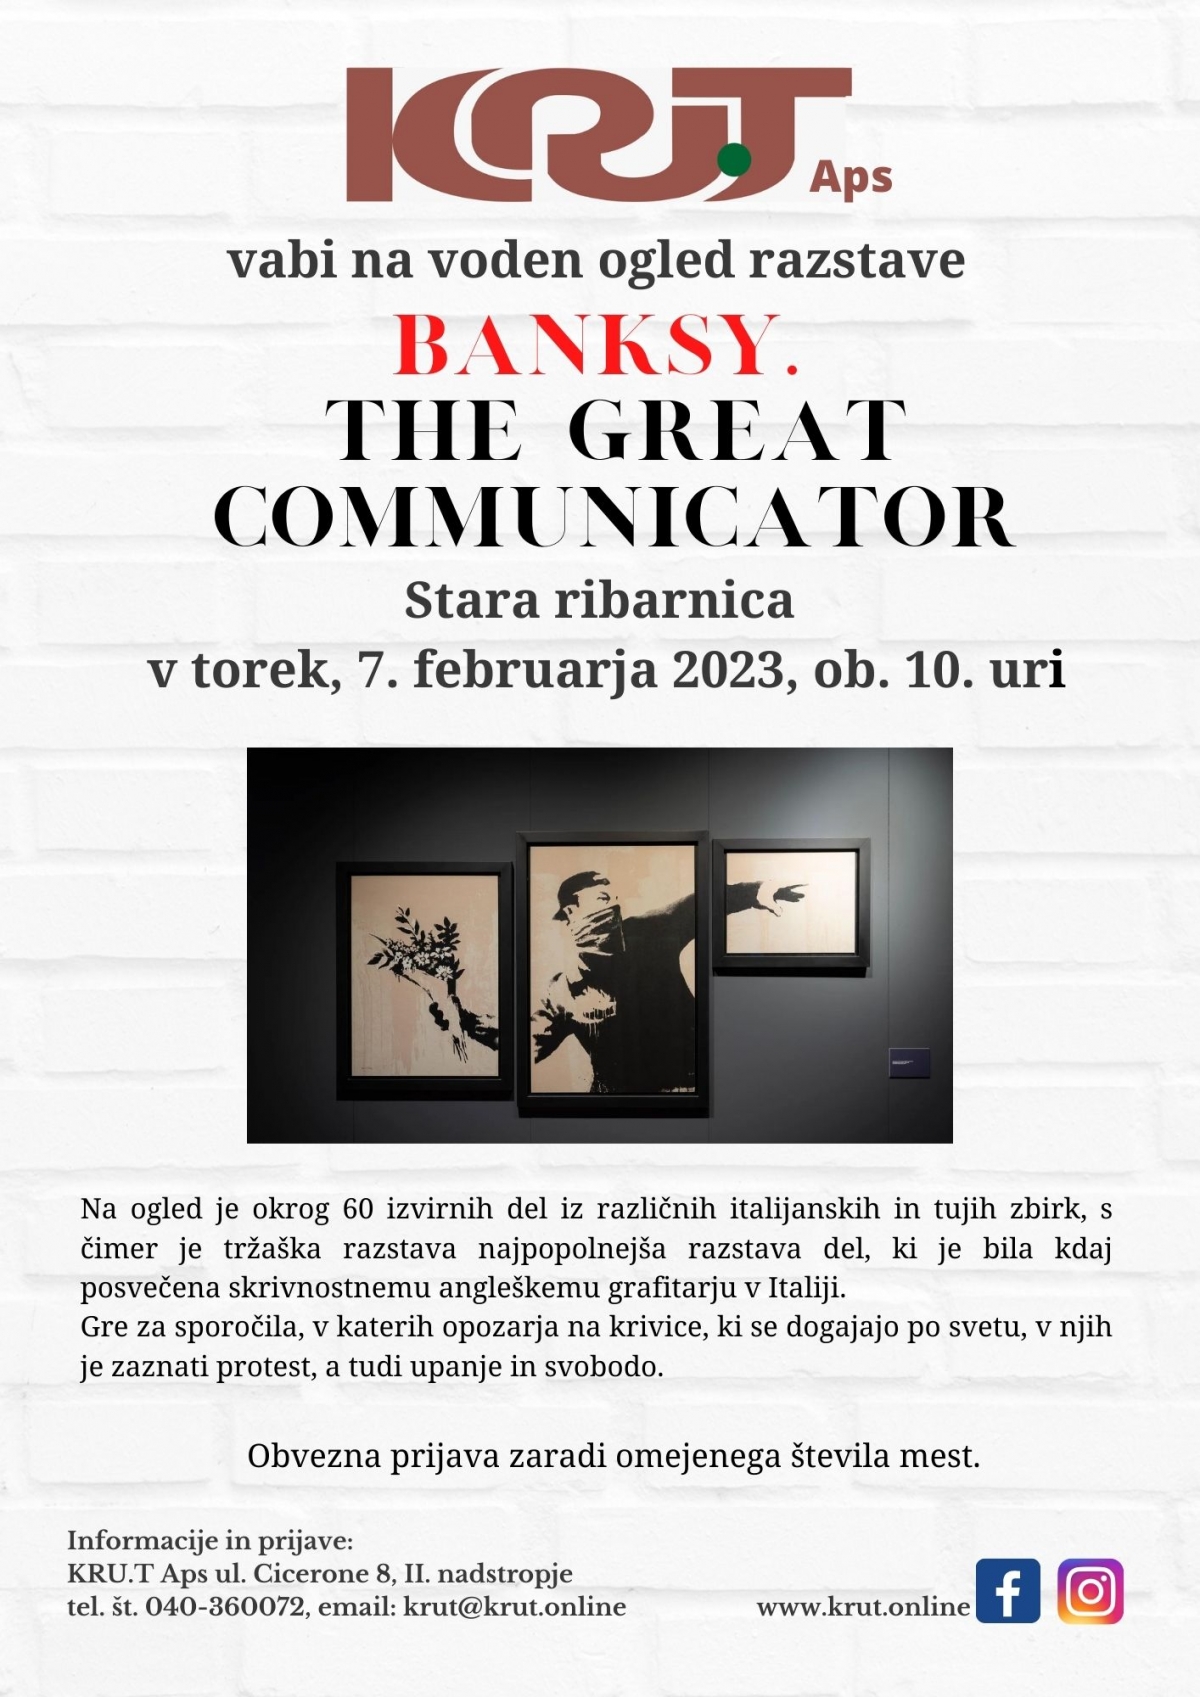 Voden ogled razstave Banksy - The great communicator v torek, 7. februarja ob 10. uri